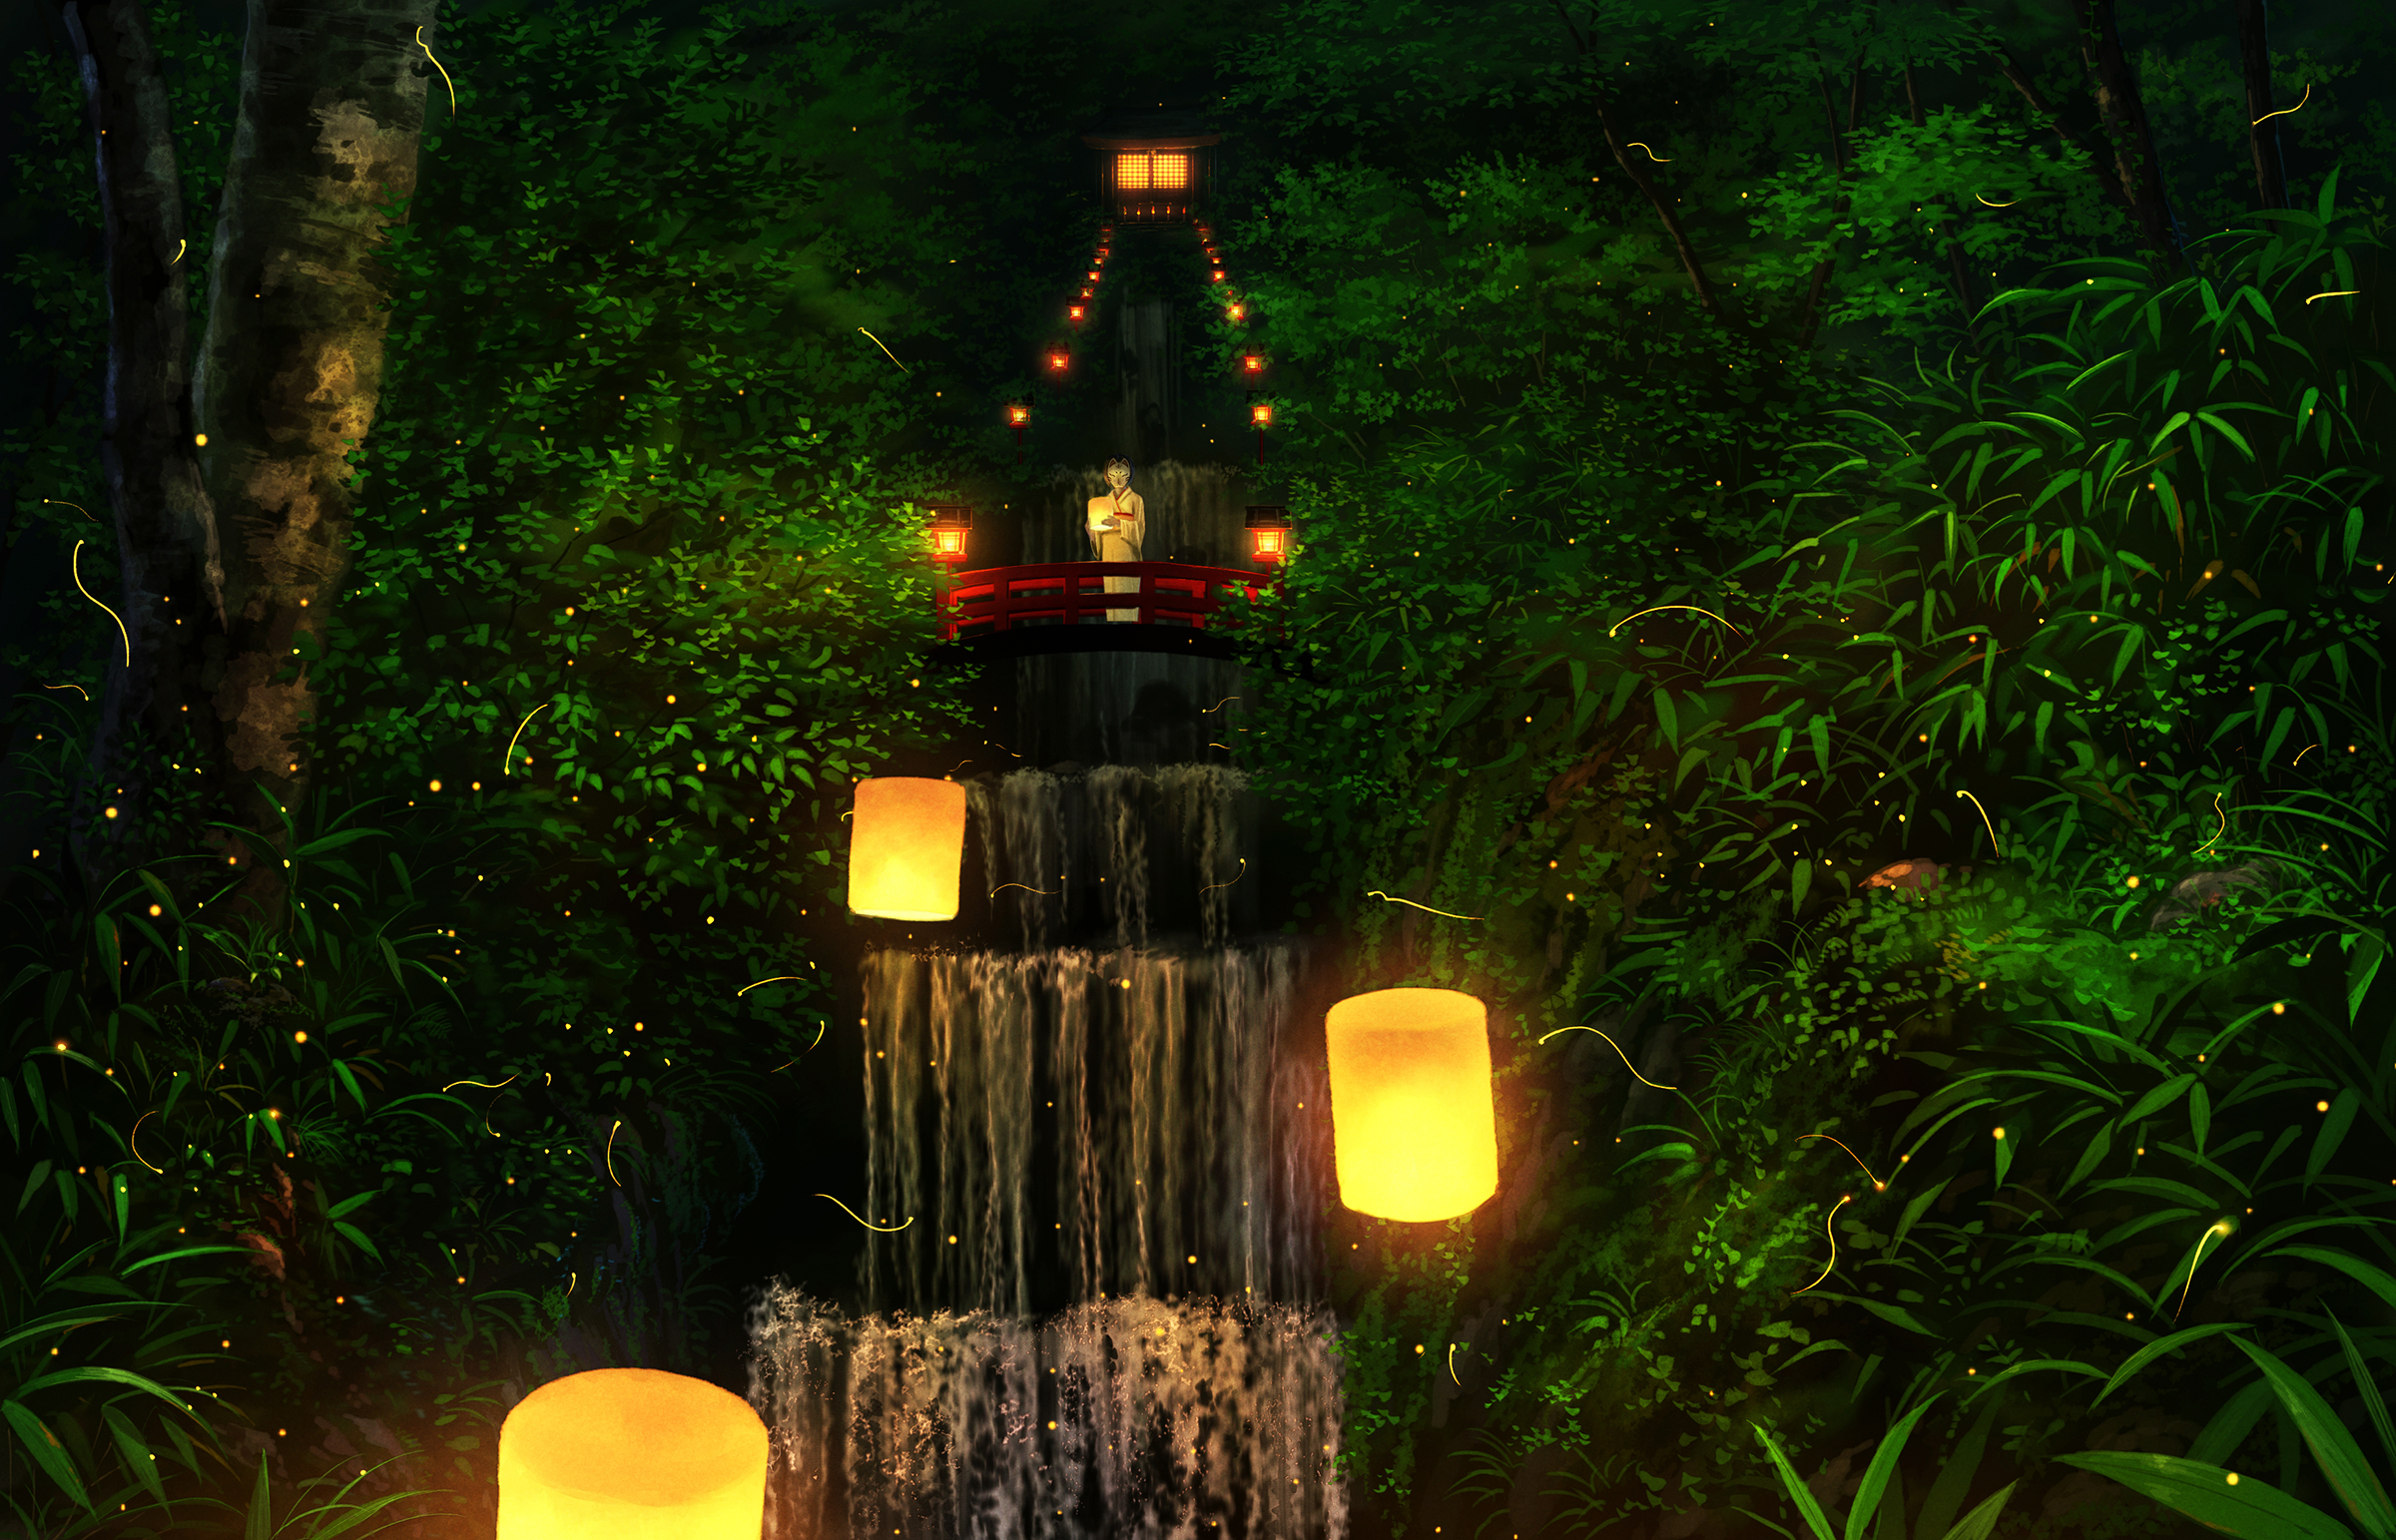 General 2400x1543 artwork digital art landscape forest waterfall lantern trees